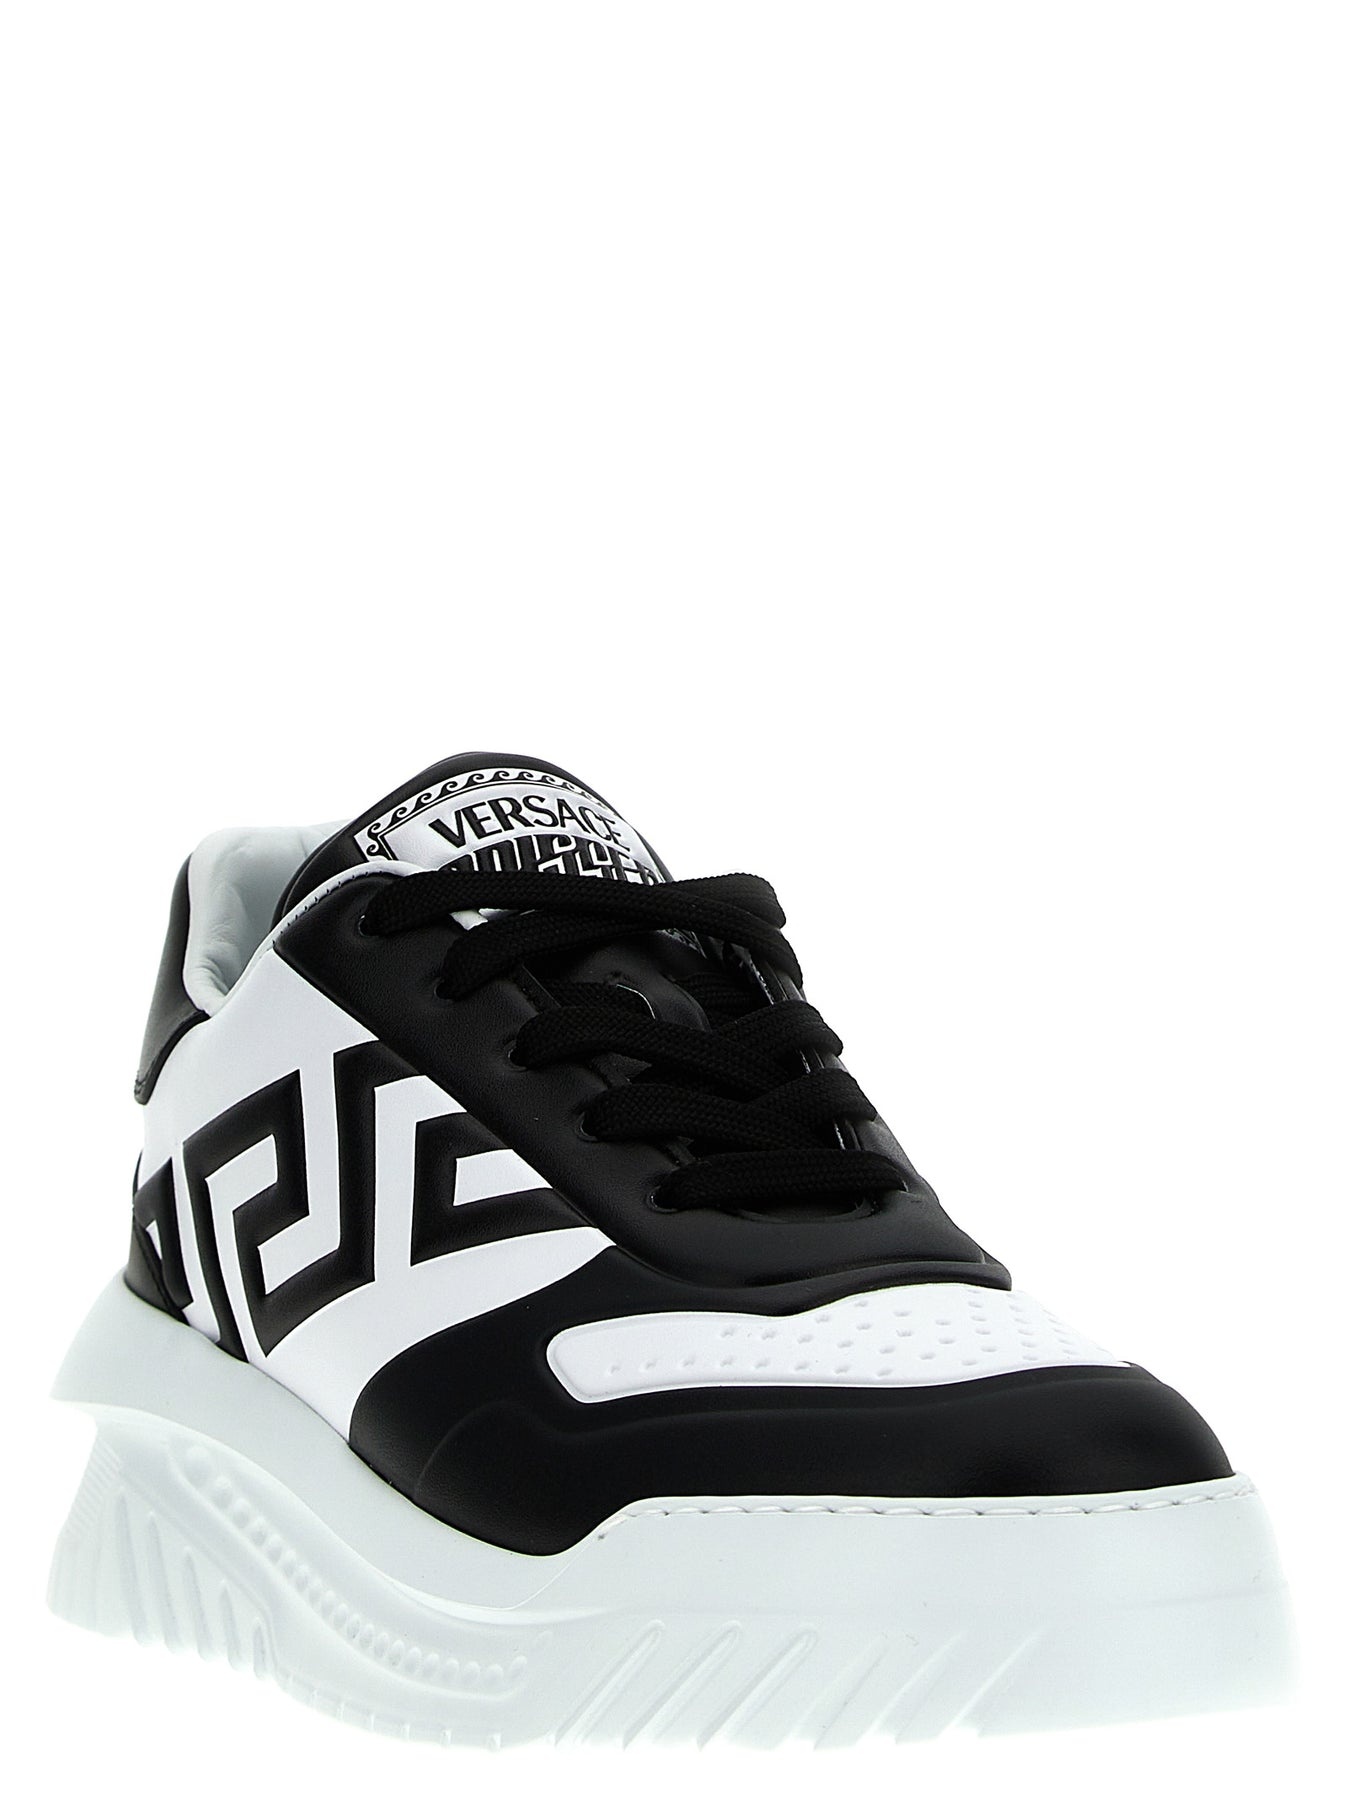 Odissea Greca Sneakers White/Black - 2